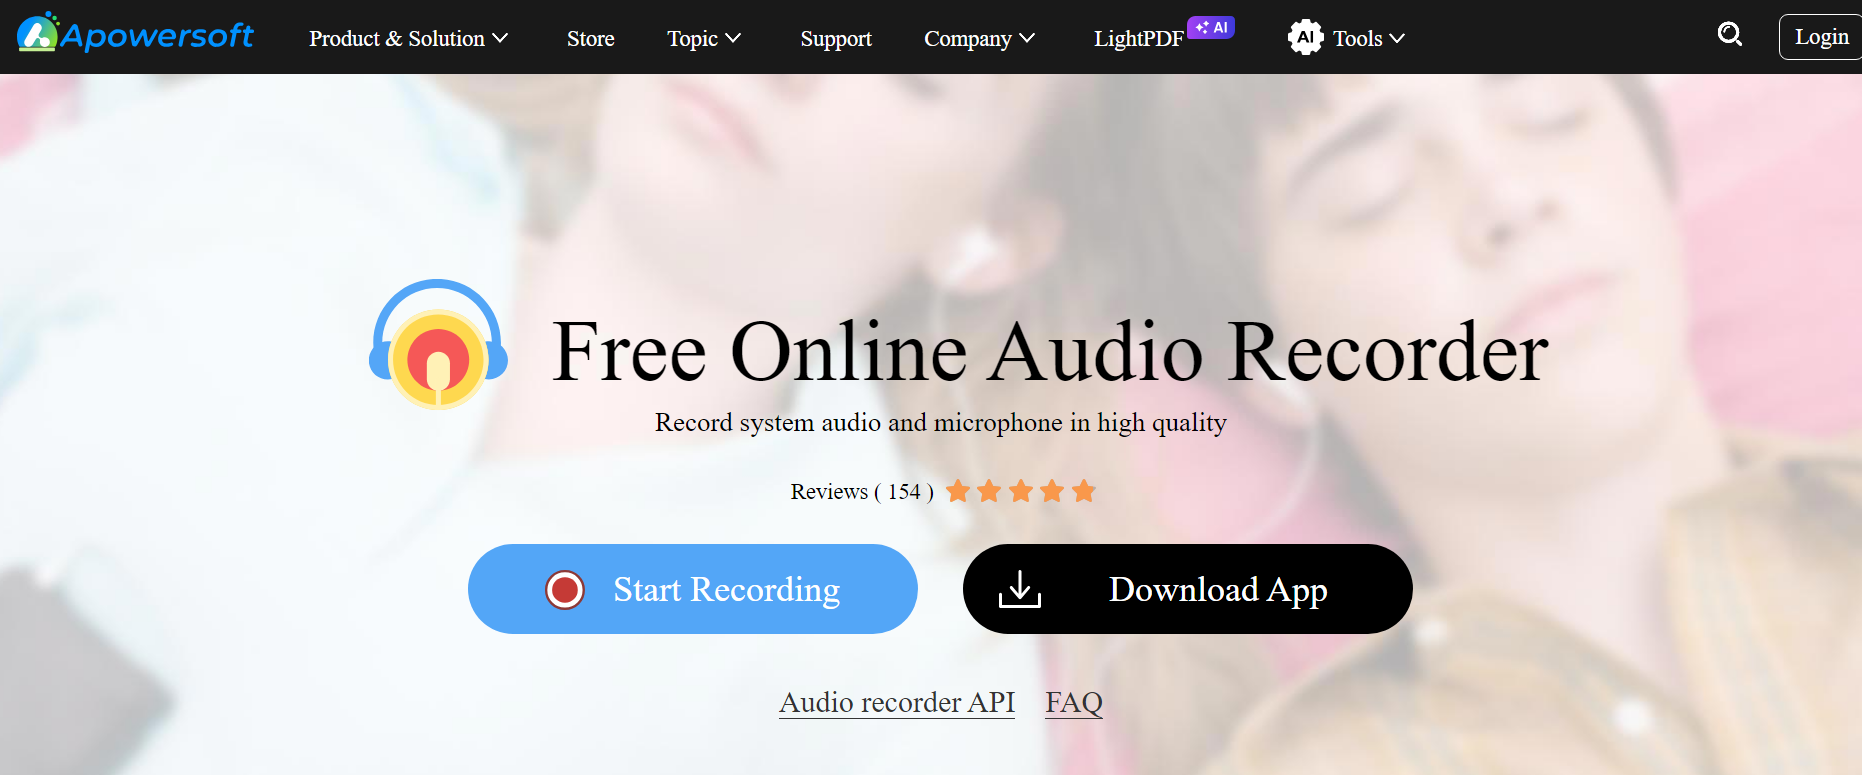 Apowersoft free online recorder